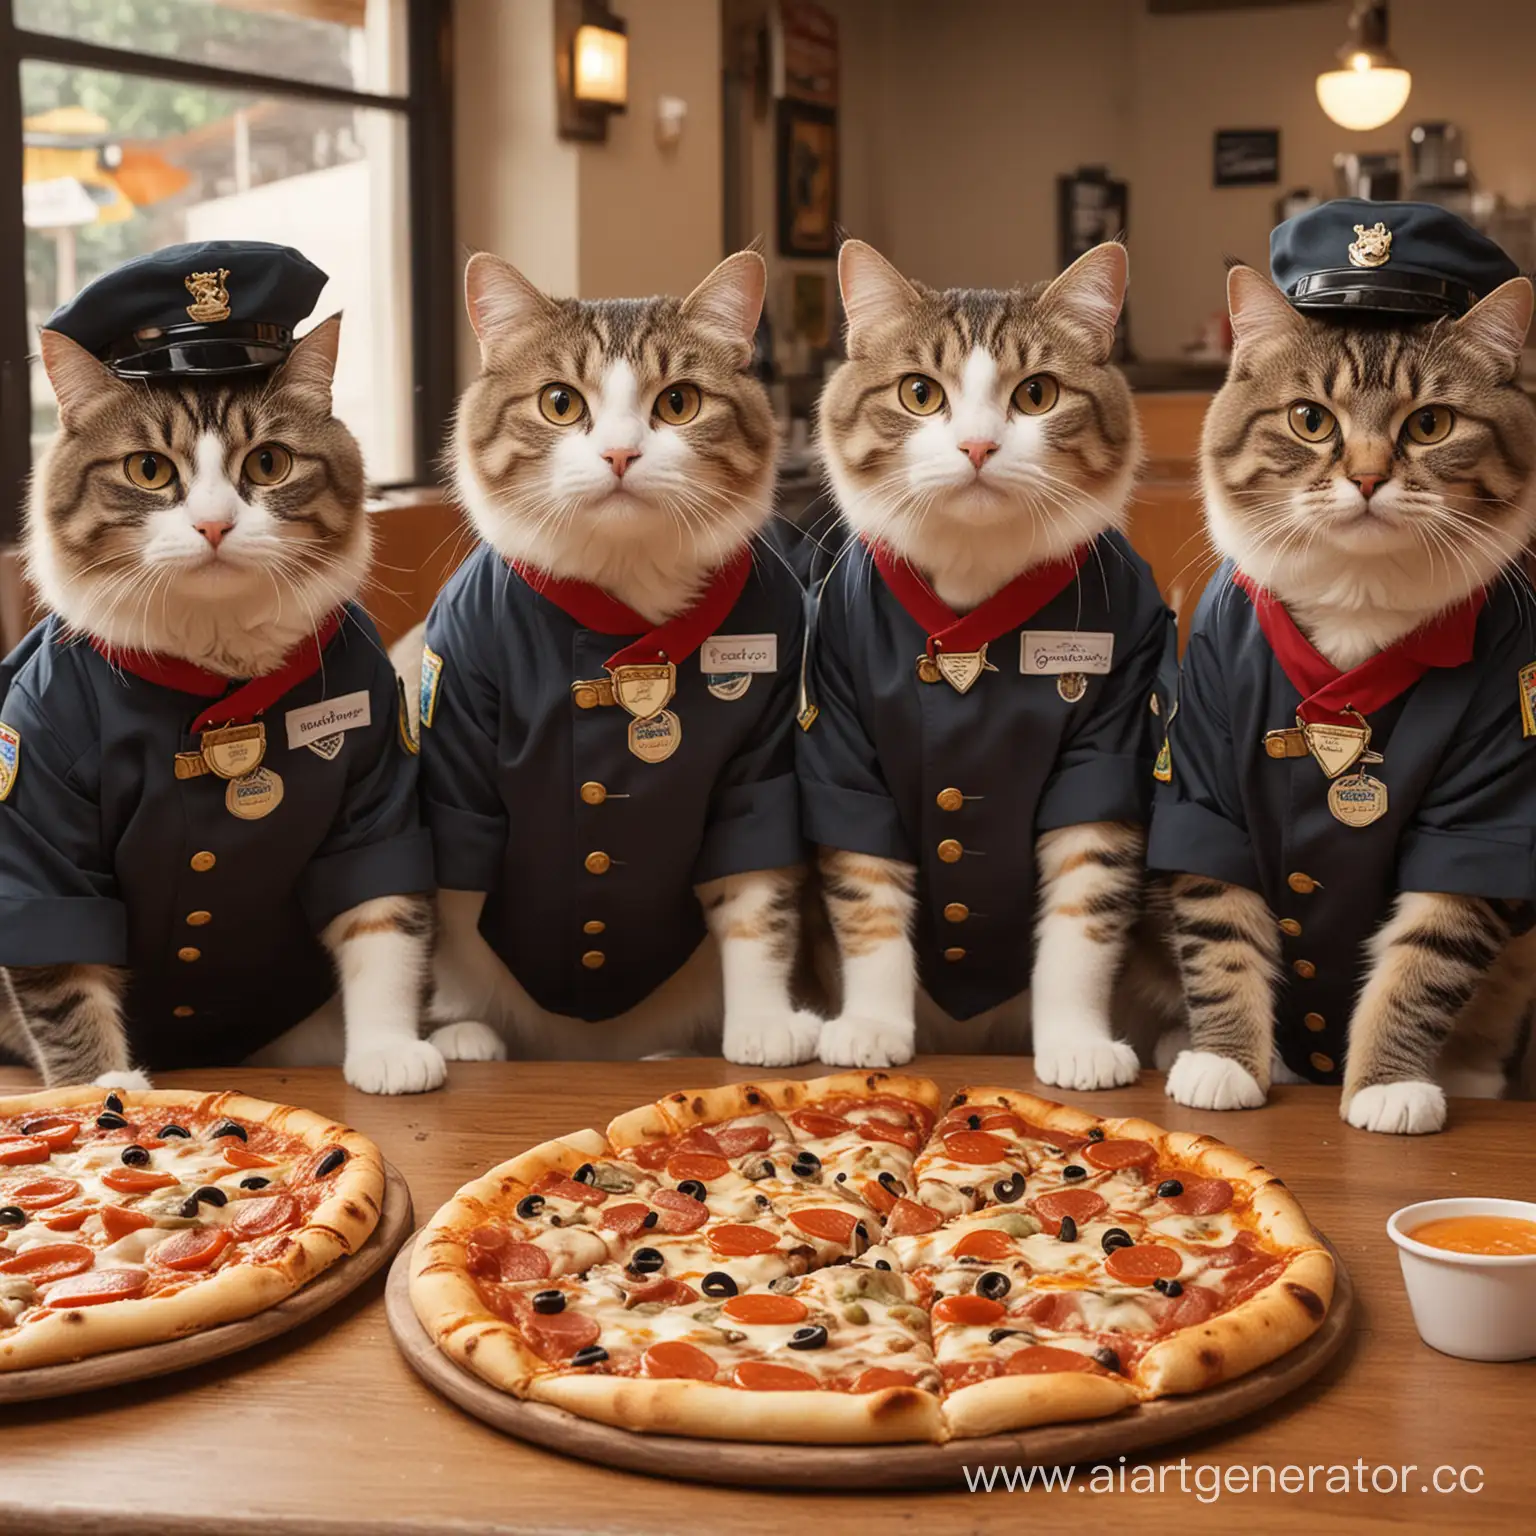 Adorable-Cats-in-Dodo-Pizza-Uniforms-Enjoying-Dodo-Pizza-and-Drinks